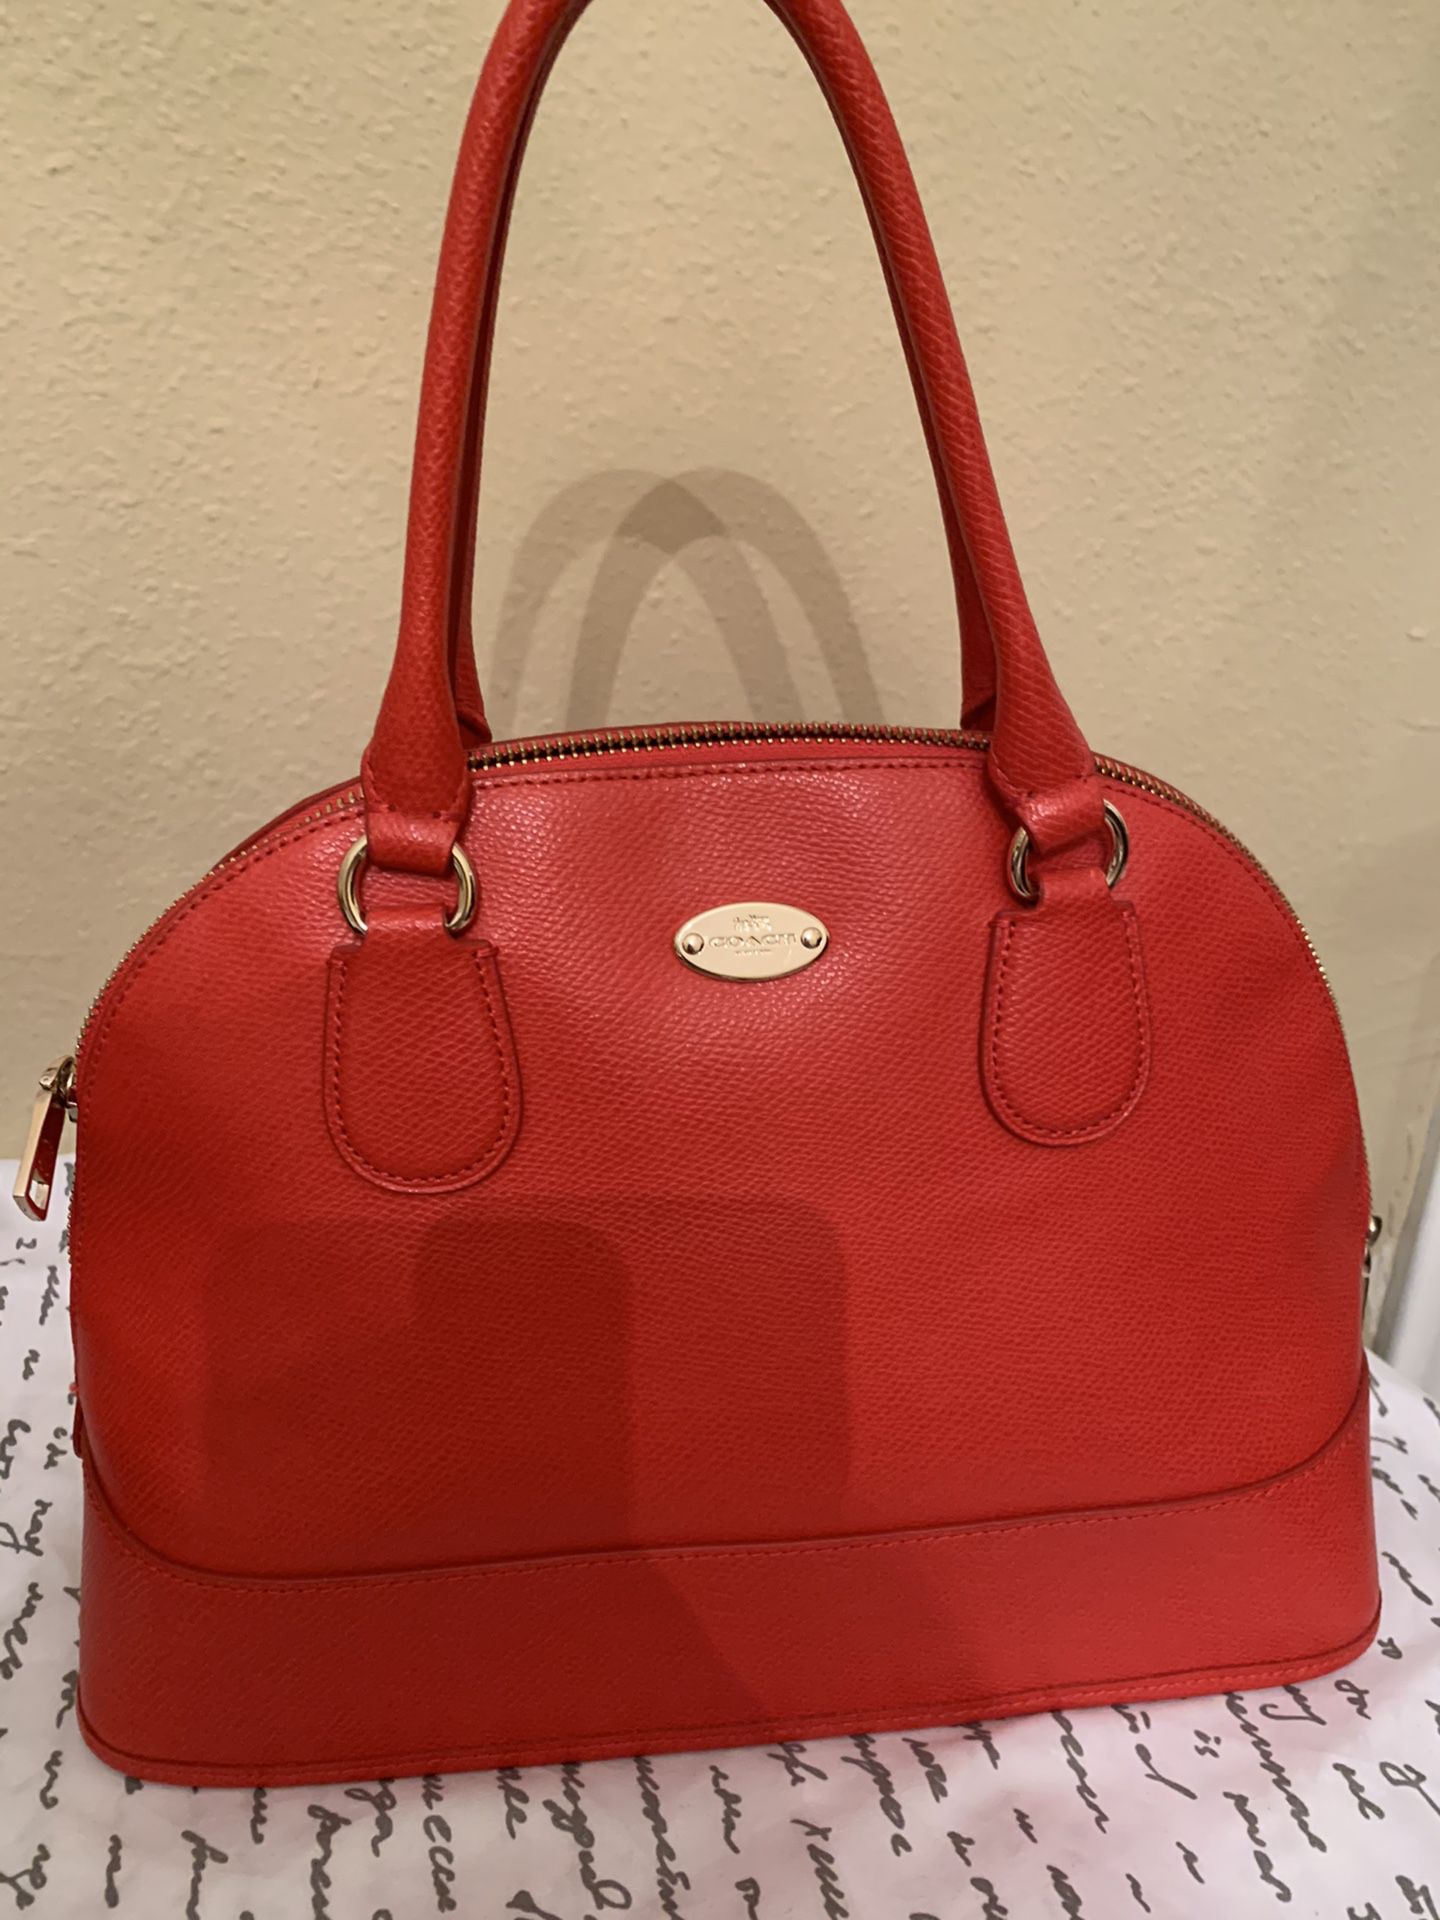 Authentic COACH red Crossgrain Leather Elegant Dome Satchel/Shoulder Bag